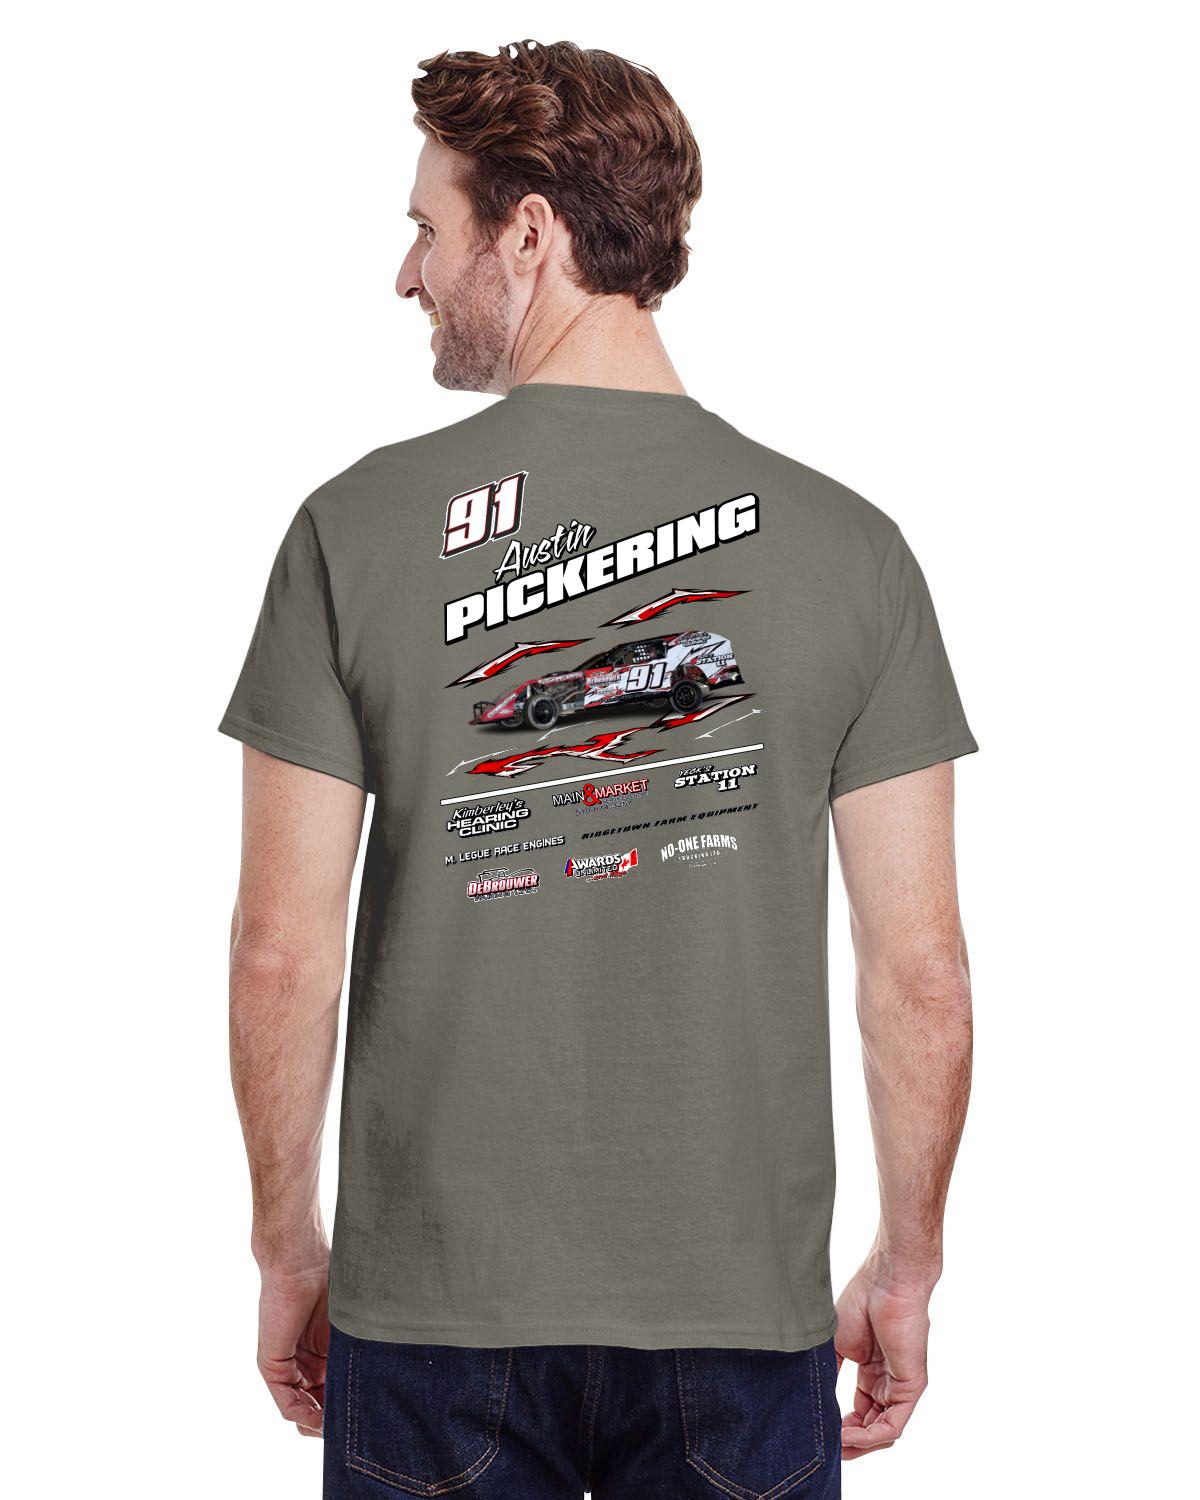 Men's Austin Pickering Double sided T-Shirt